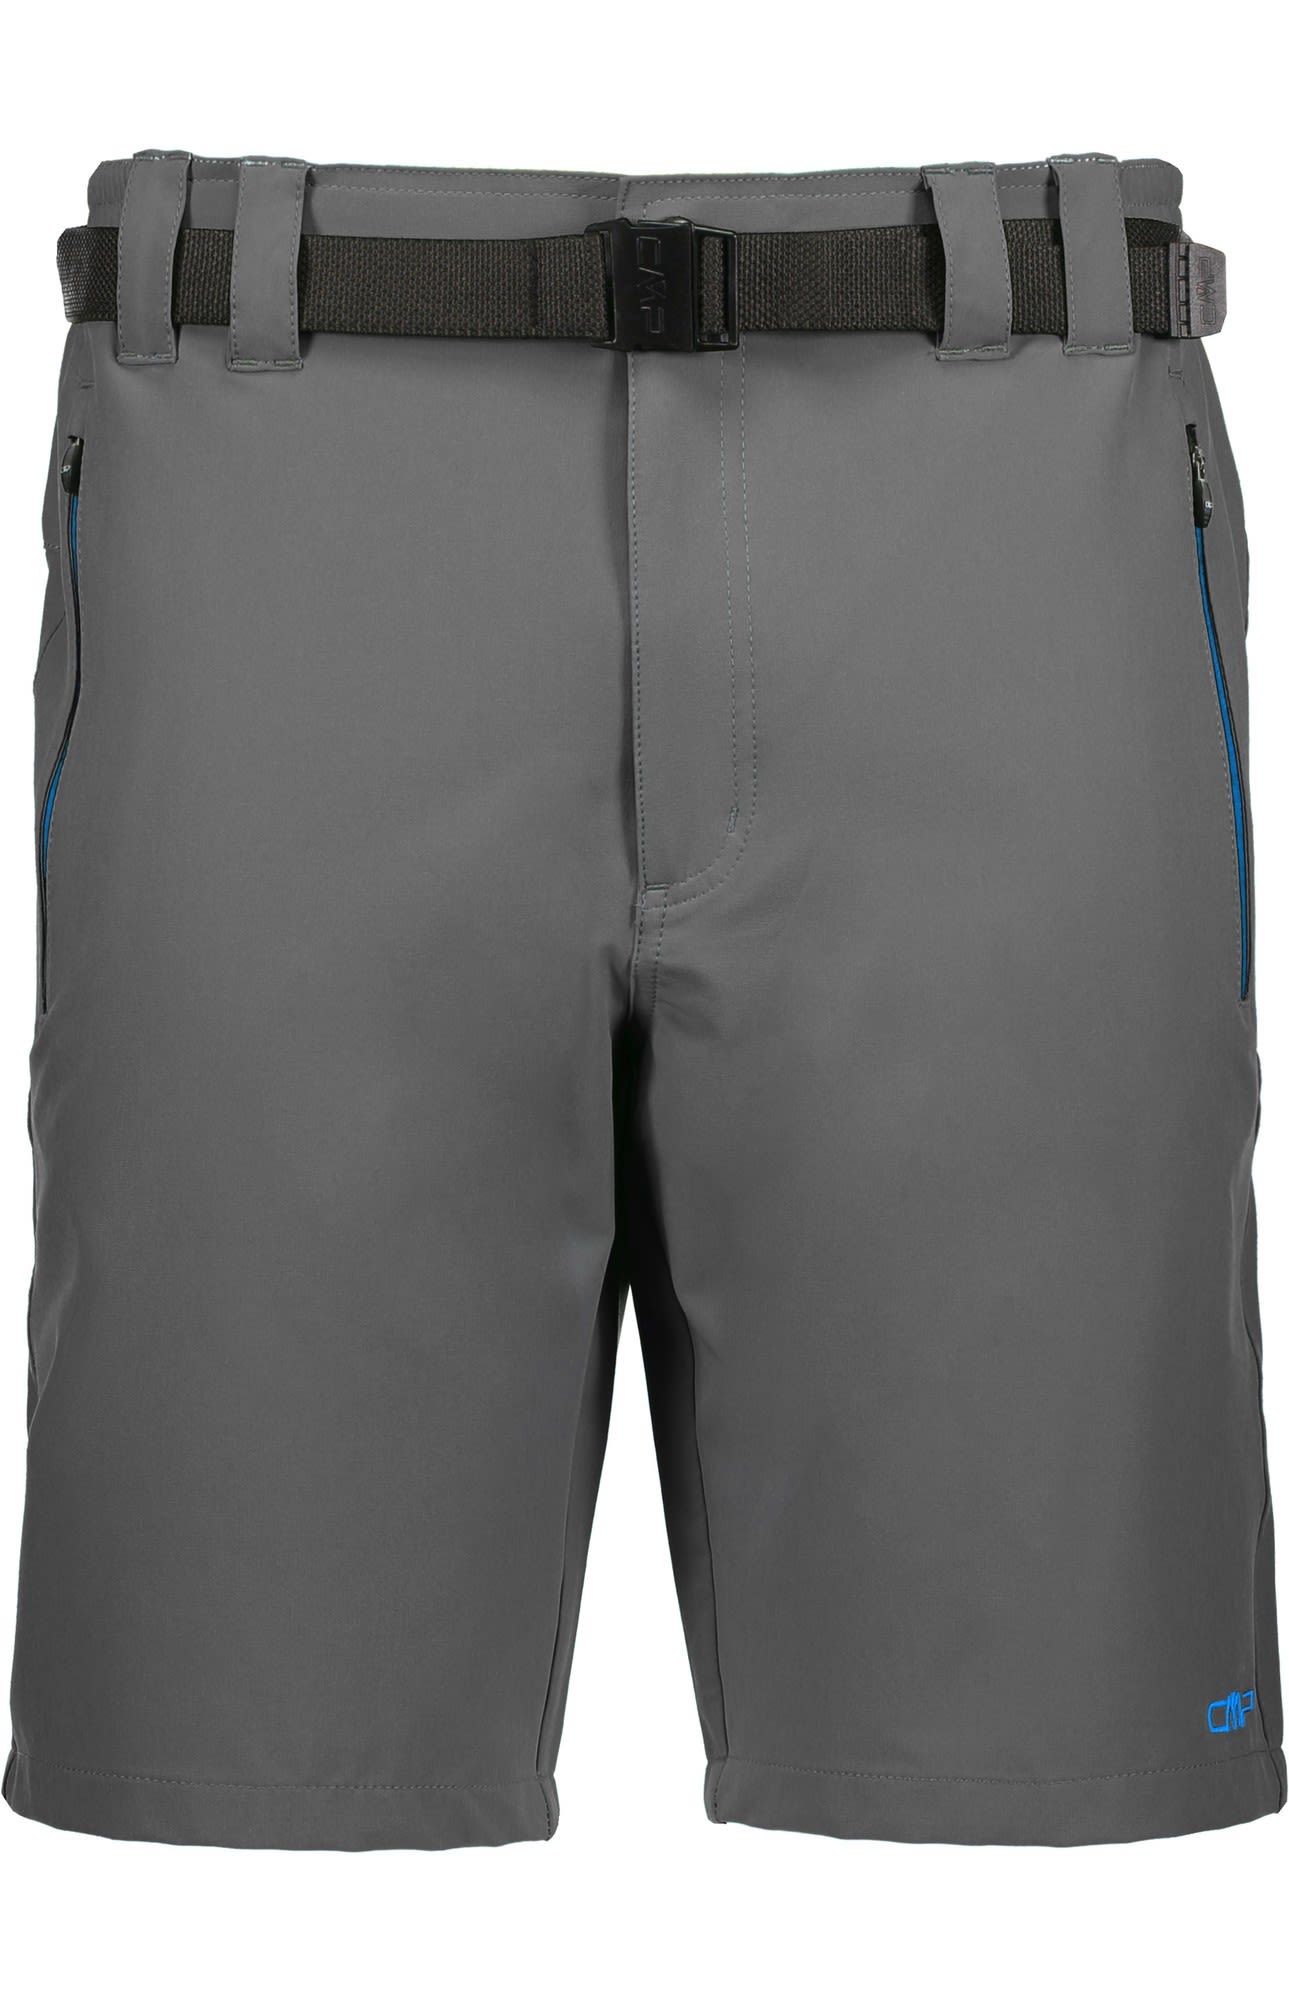 CMP Bermuda Stretch Polyester Grau- Male Shorts- Grsse 46 - Farbe Antracite